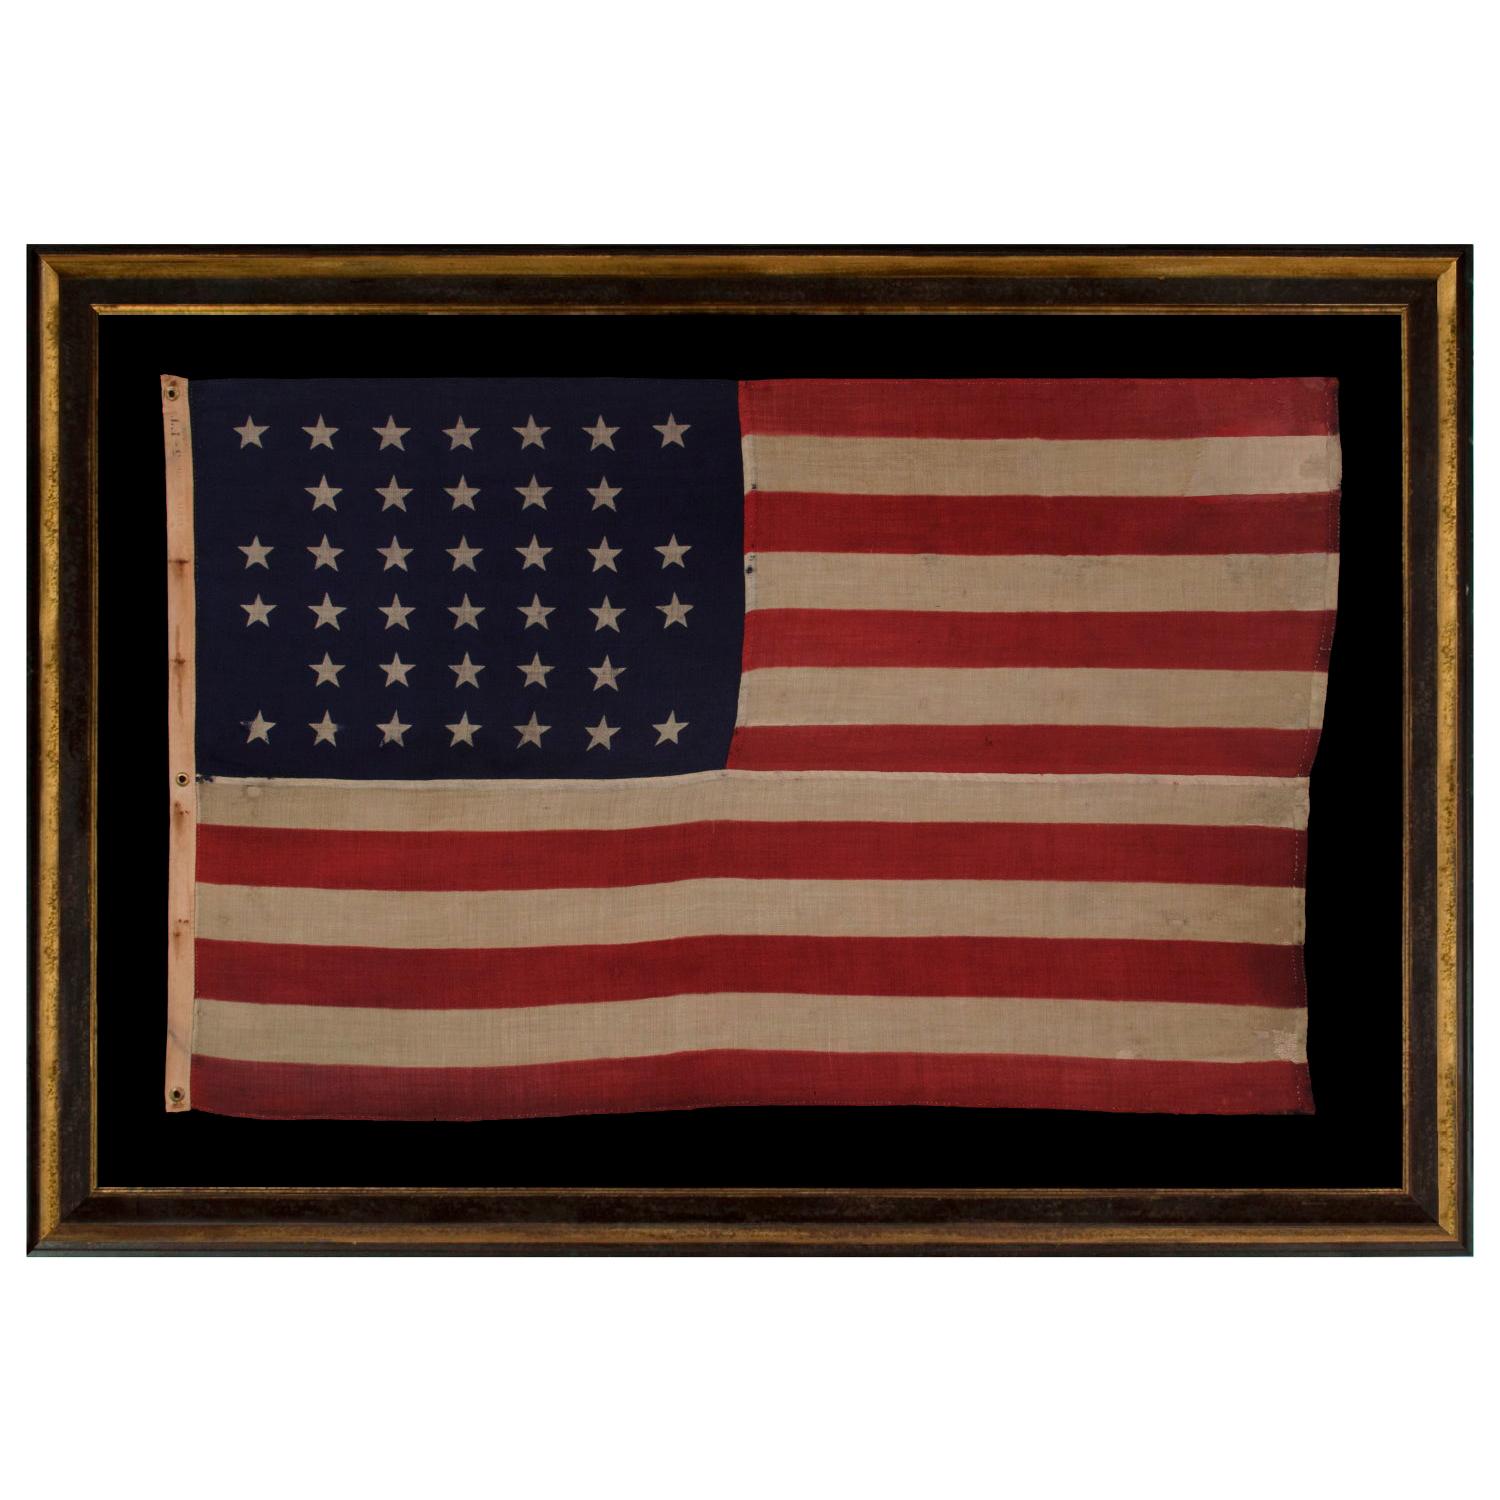 38 Sterne Amerikanische Flagge Hergestellt von U.S Bunting Company:: Lowell:: Massachusetts